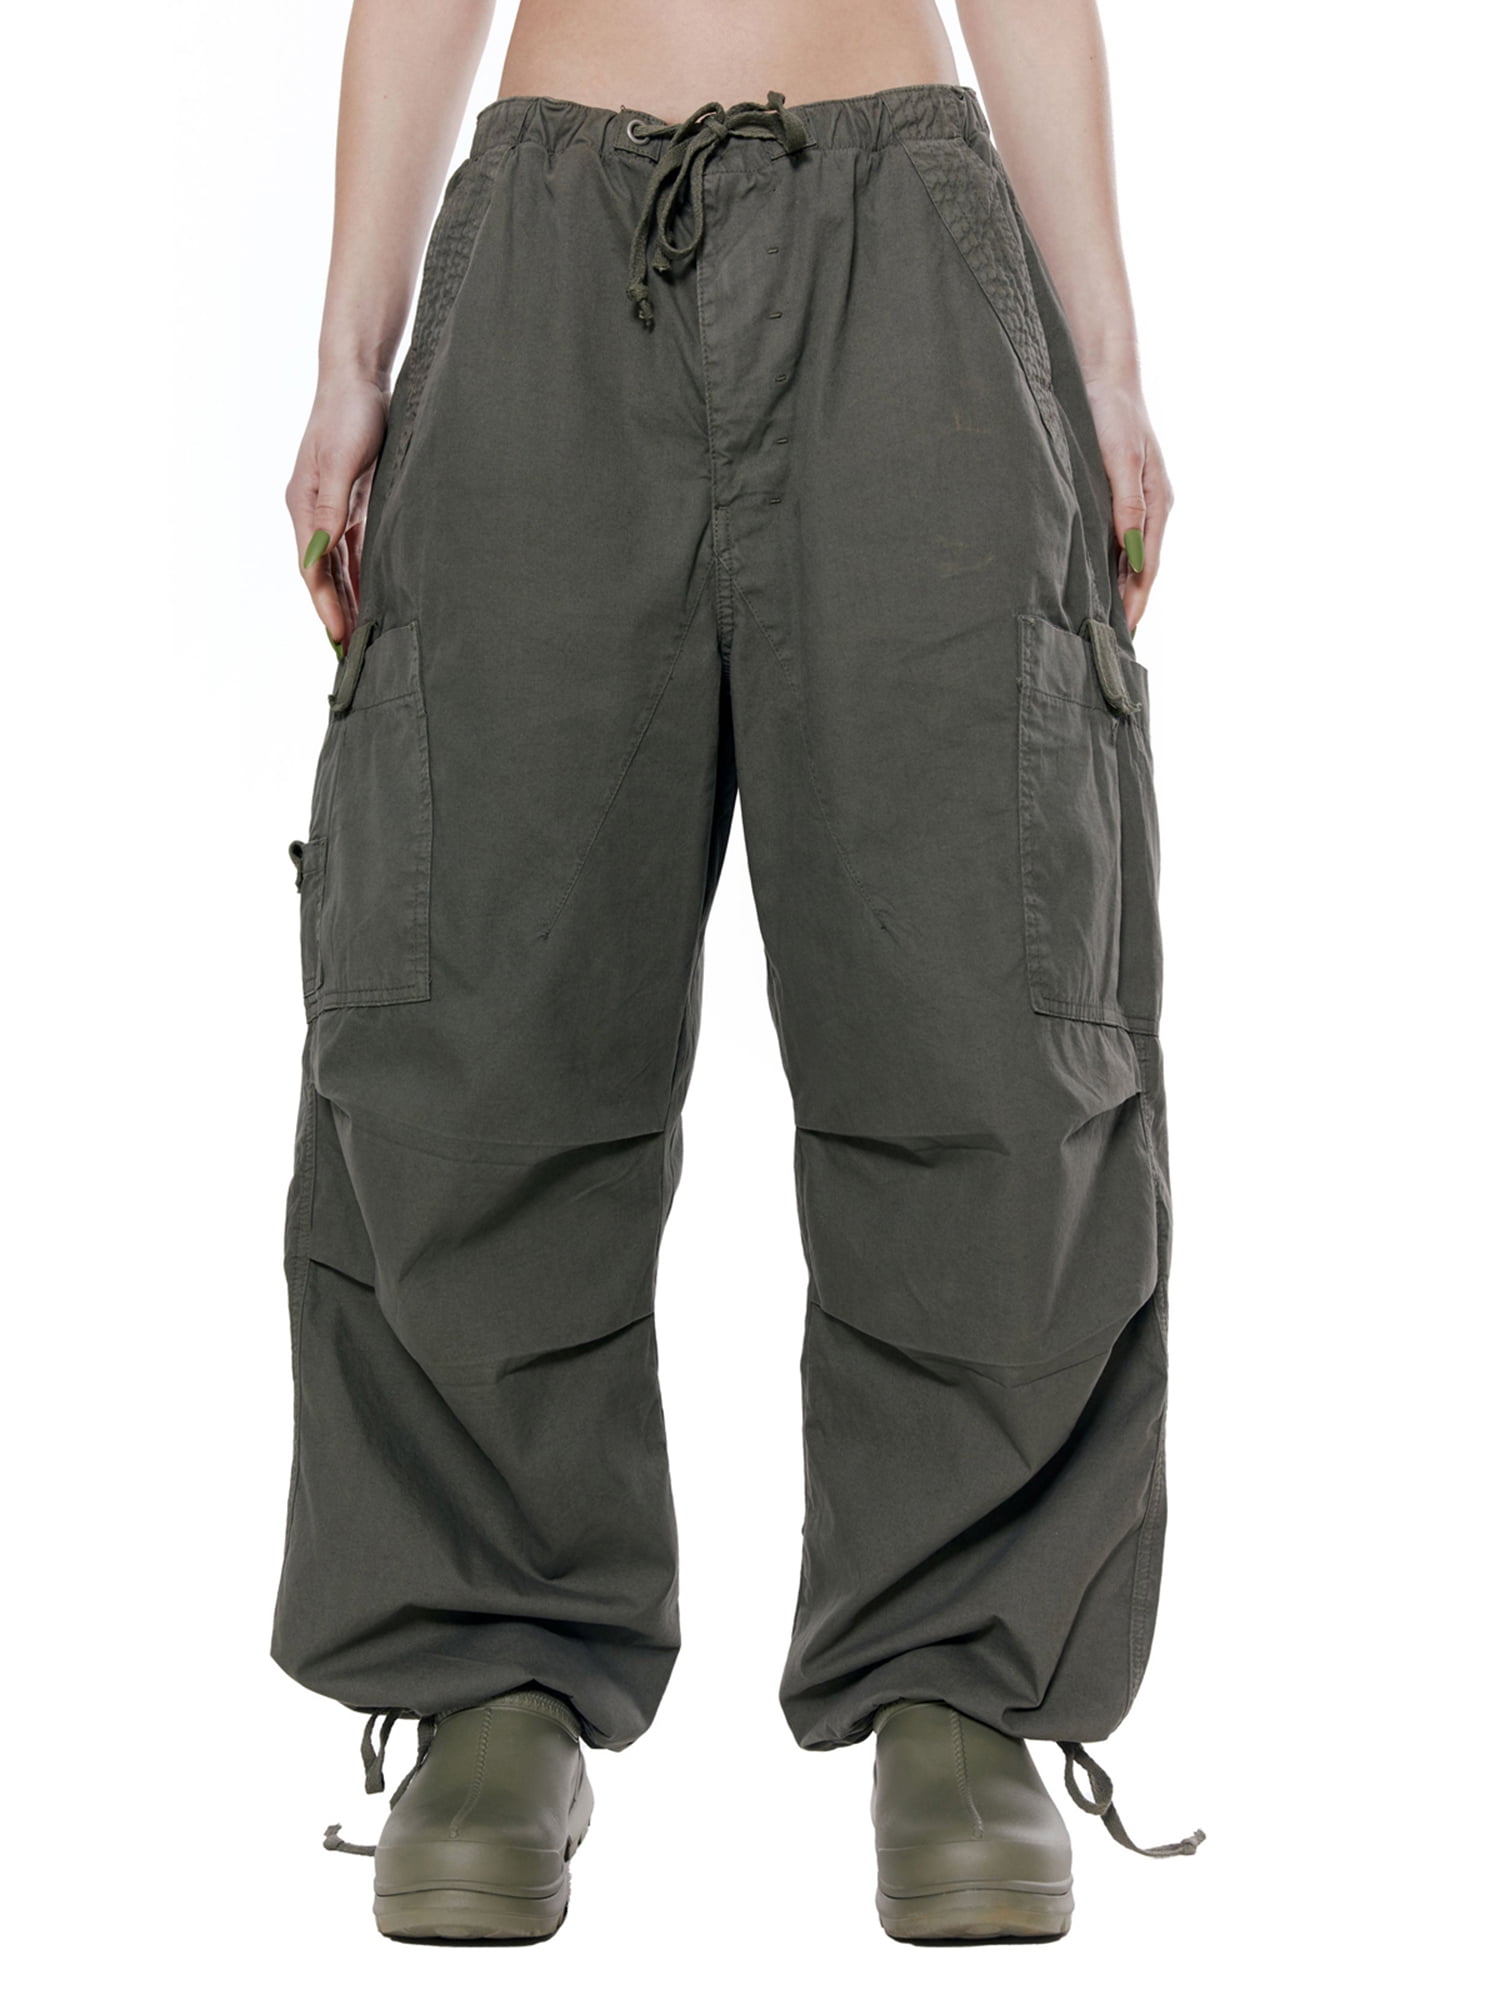 Women's Cargo Pants Casual Elastic Drawstring High Waist Baggy Jogger  Workout Pants with Pockets - Walmart.com